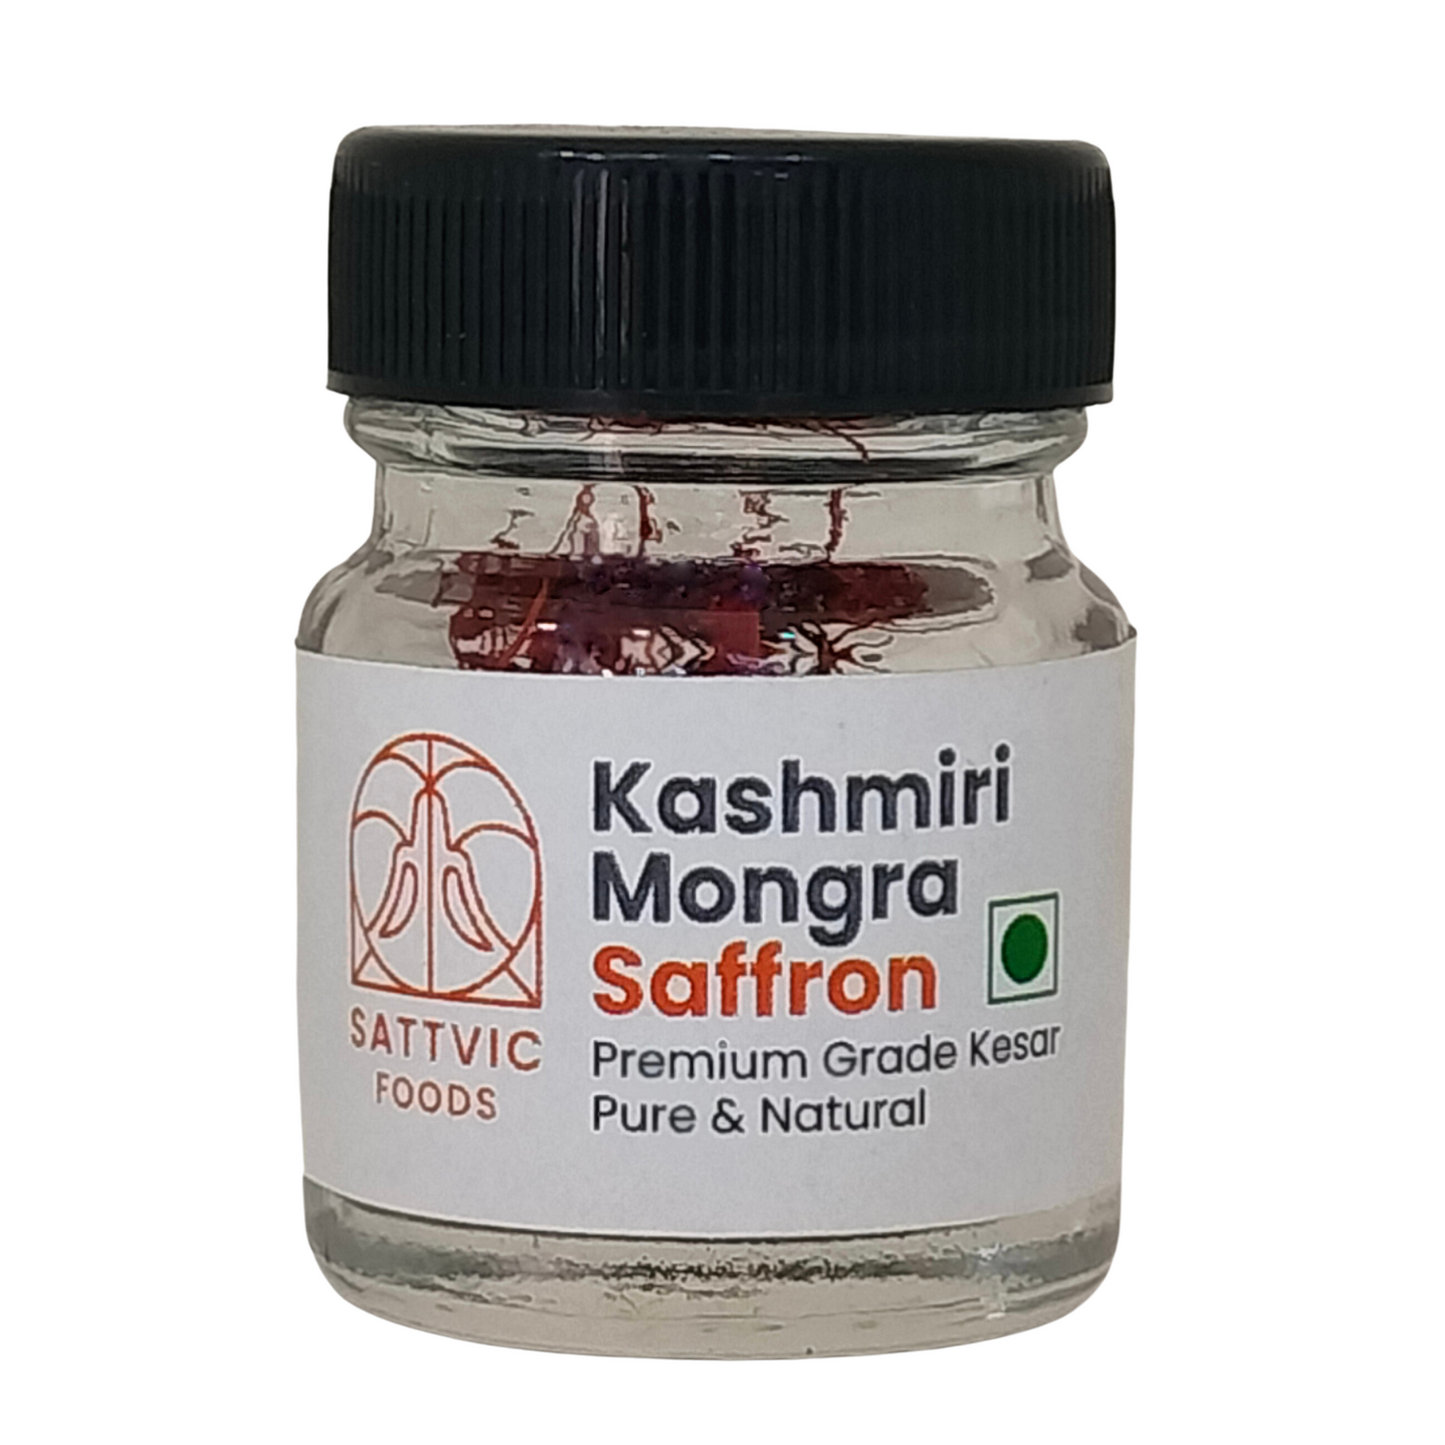 Kashmiri Mongra Saffron sattvicfoods